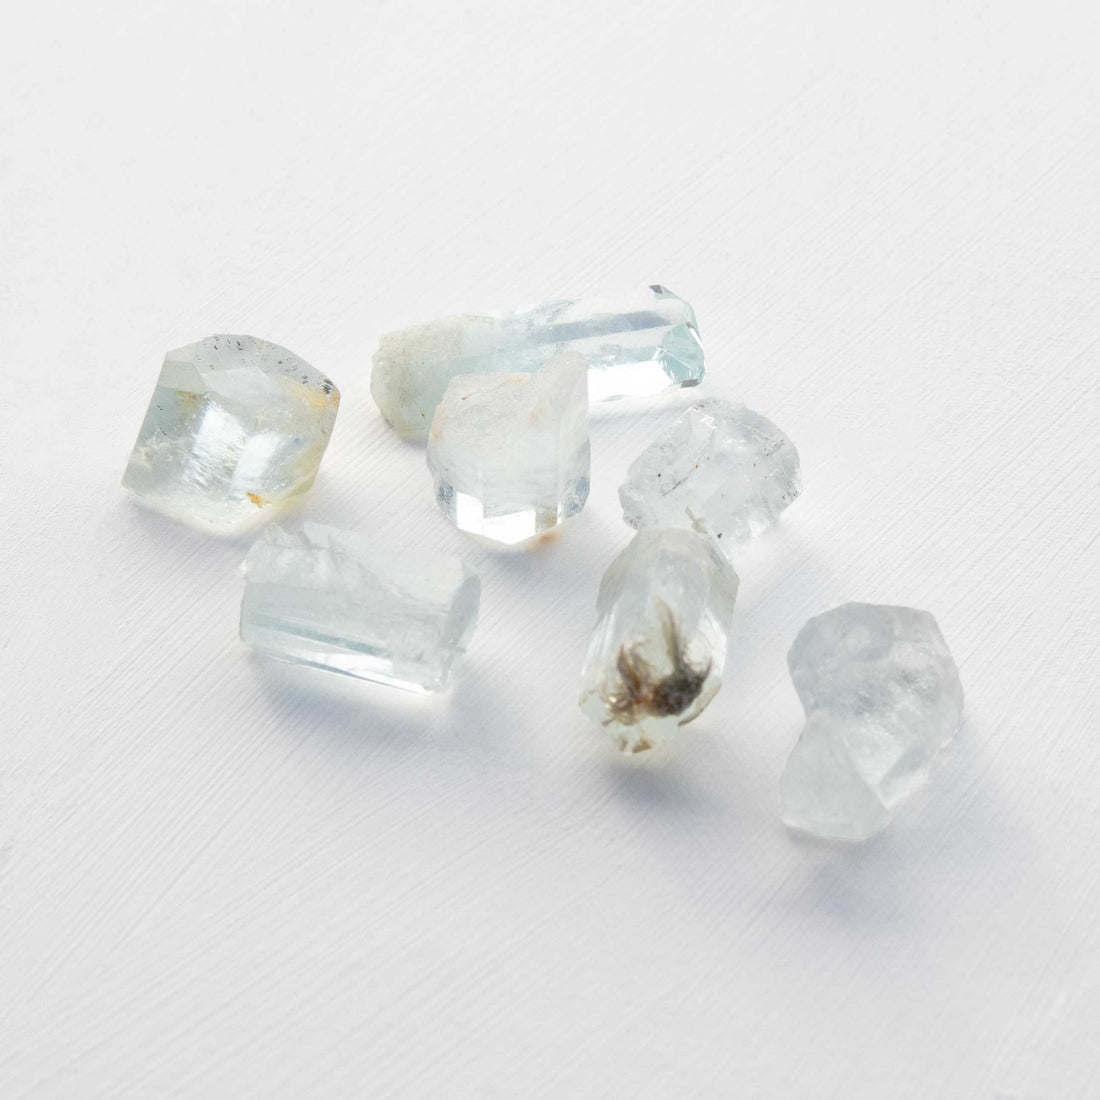 Beryl var. Aquamarine - Terminated, Small Crystals